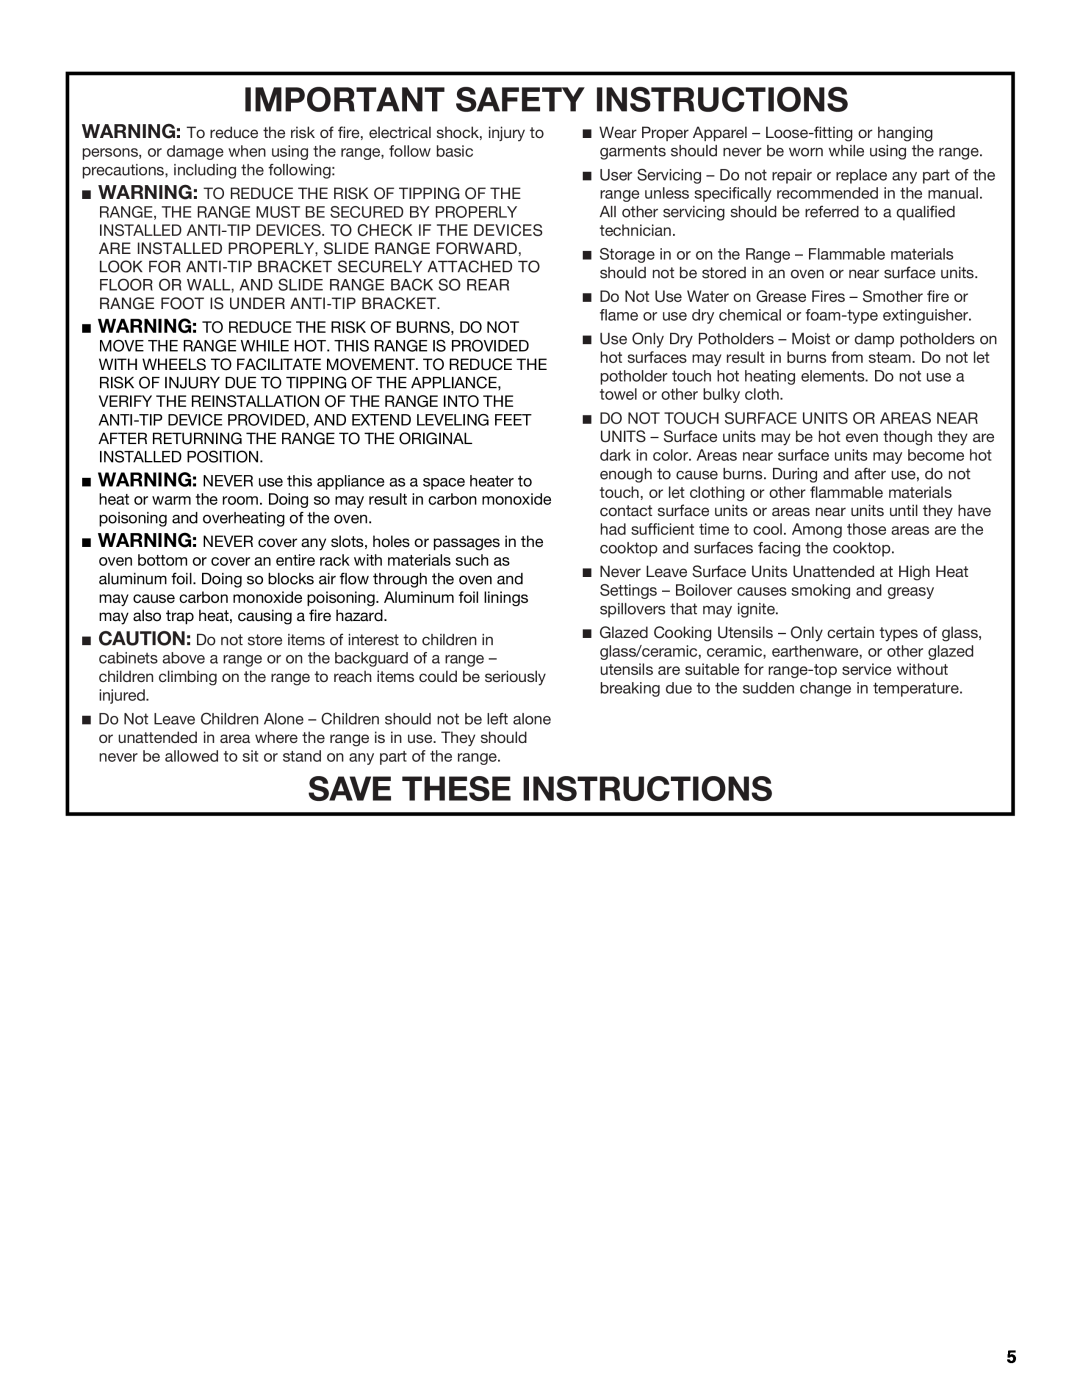 KitchenAid KDRS467, KDRS463, KDRS483, KDRS407, KDRS462 manual Important Safety Instructions, Save These Instructions 